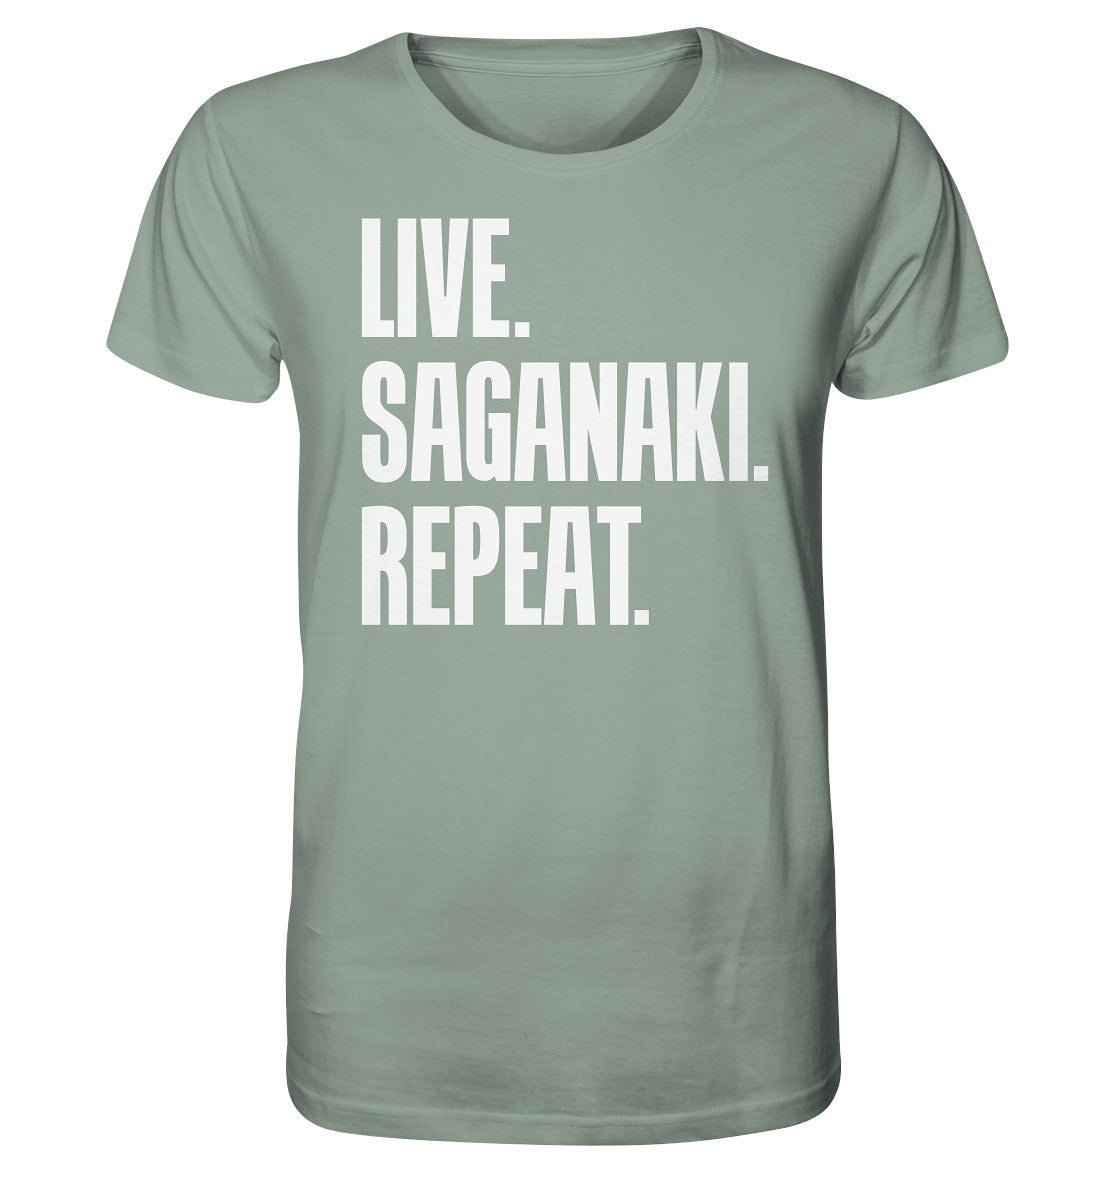 LIVE. SAGANAKI. REPEAT. -Organic shirt